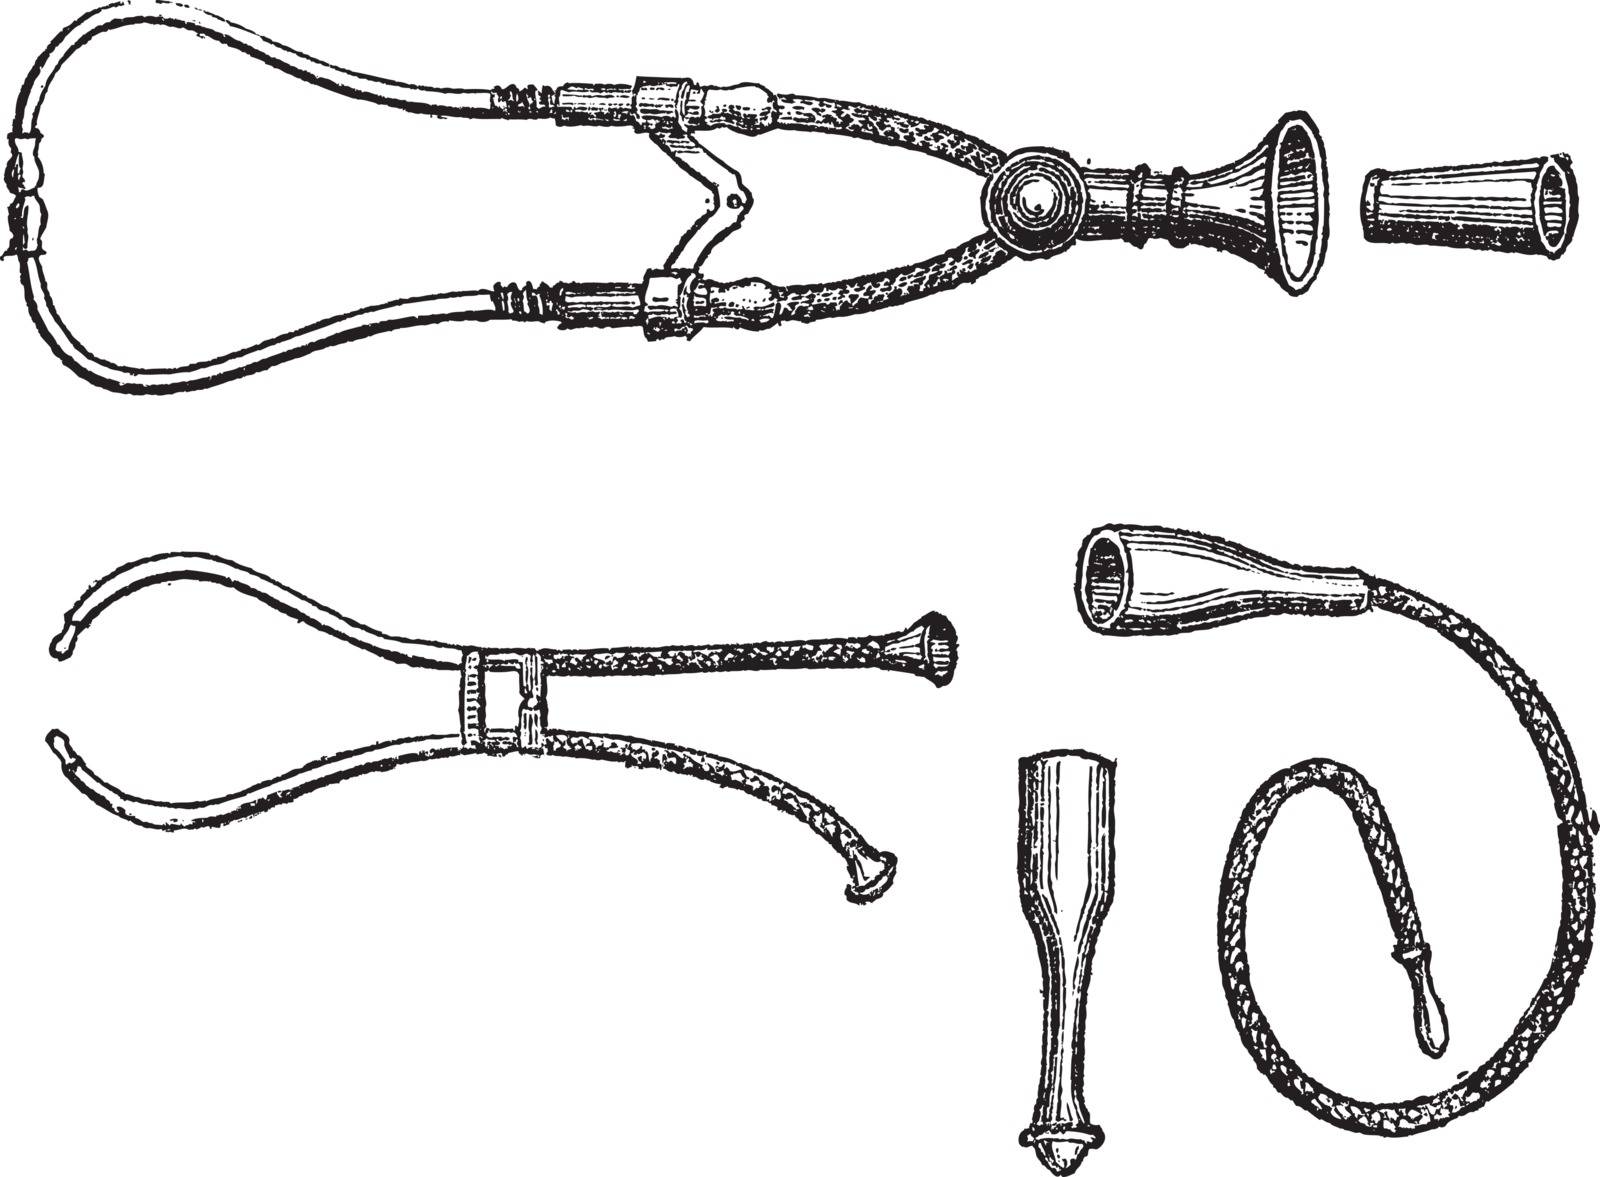 Stethoscopes vintage engraving by Morphart